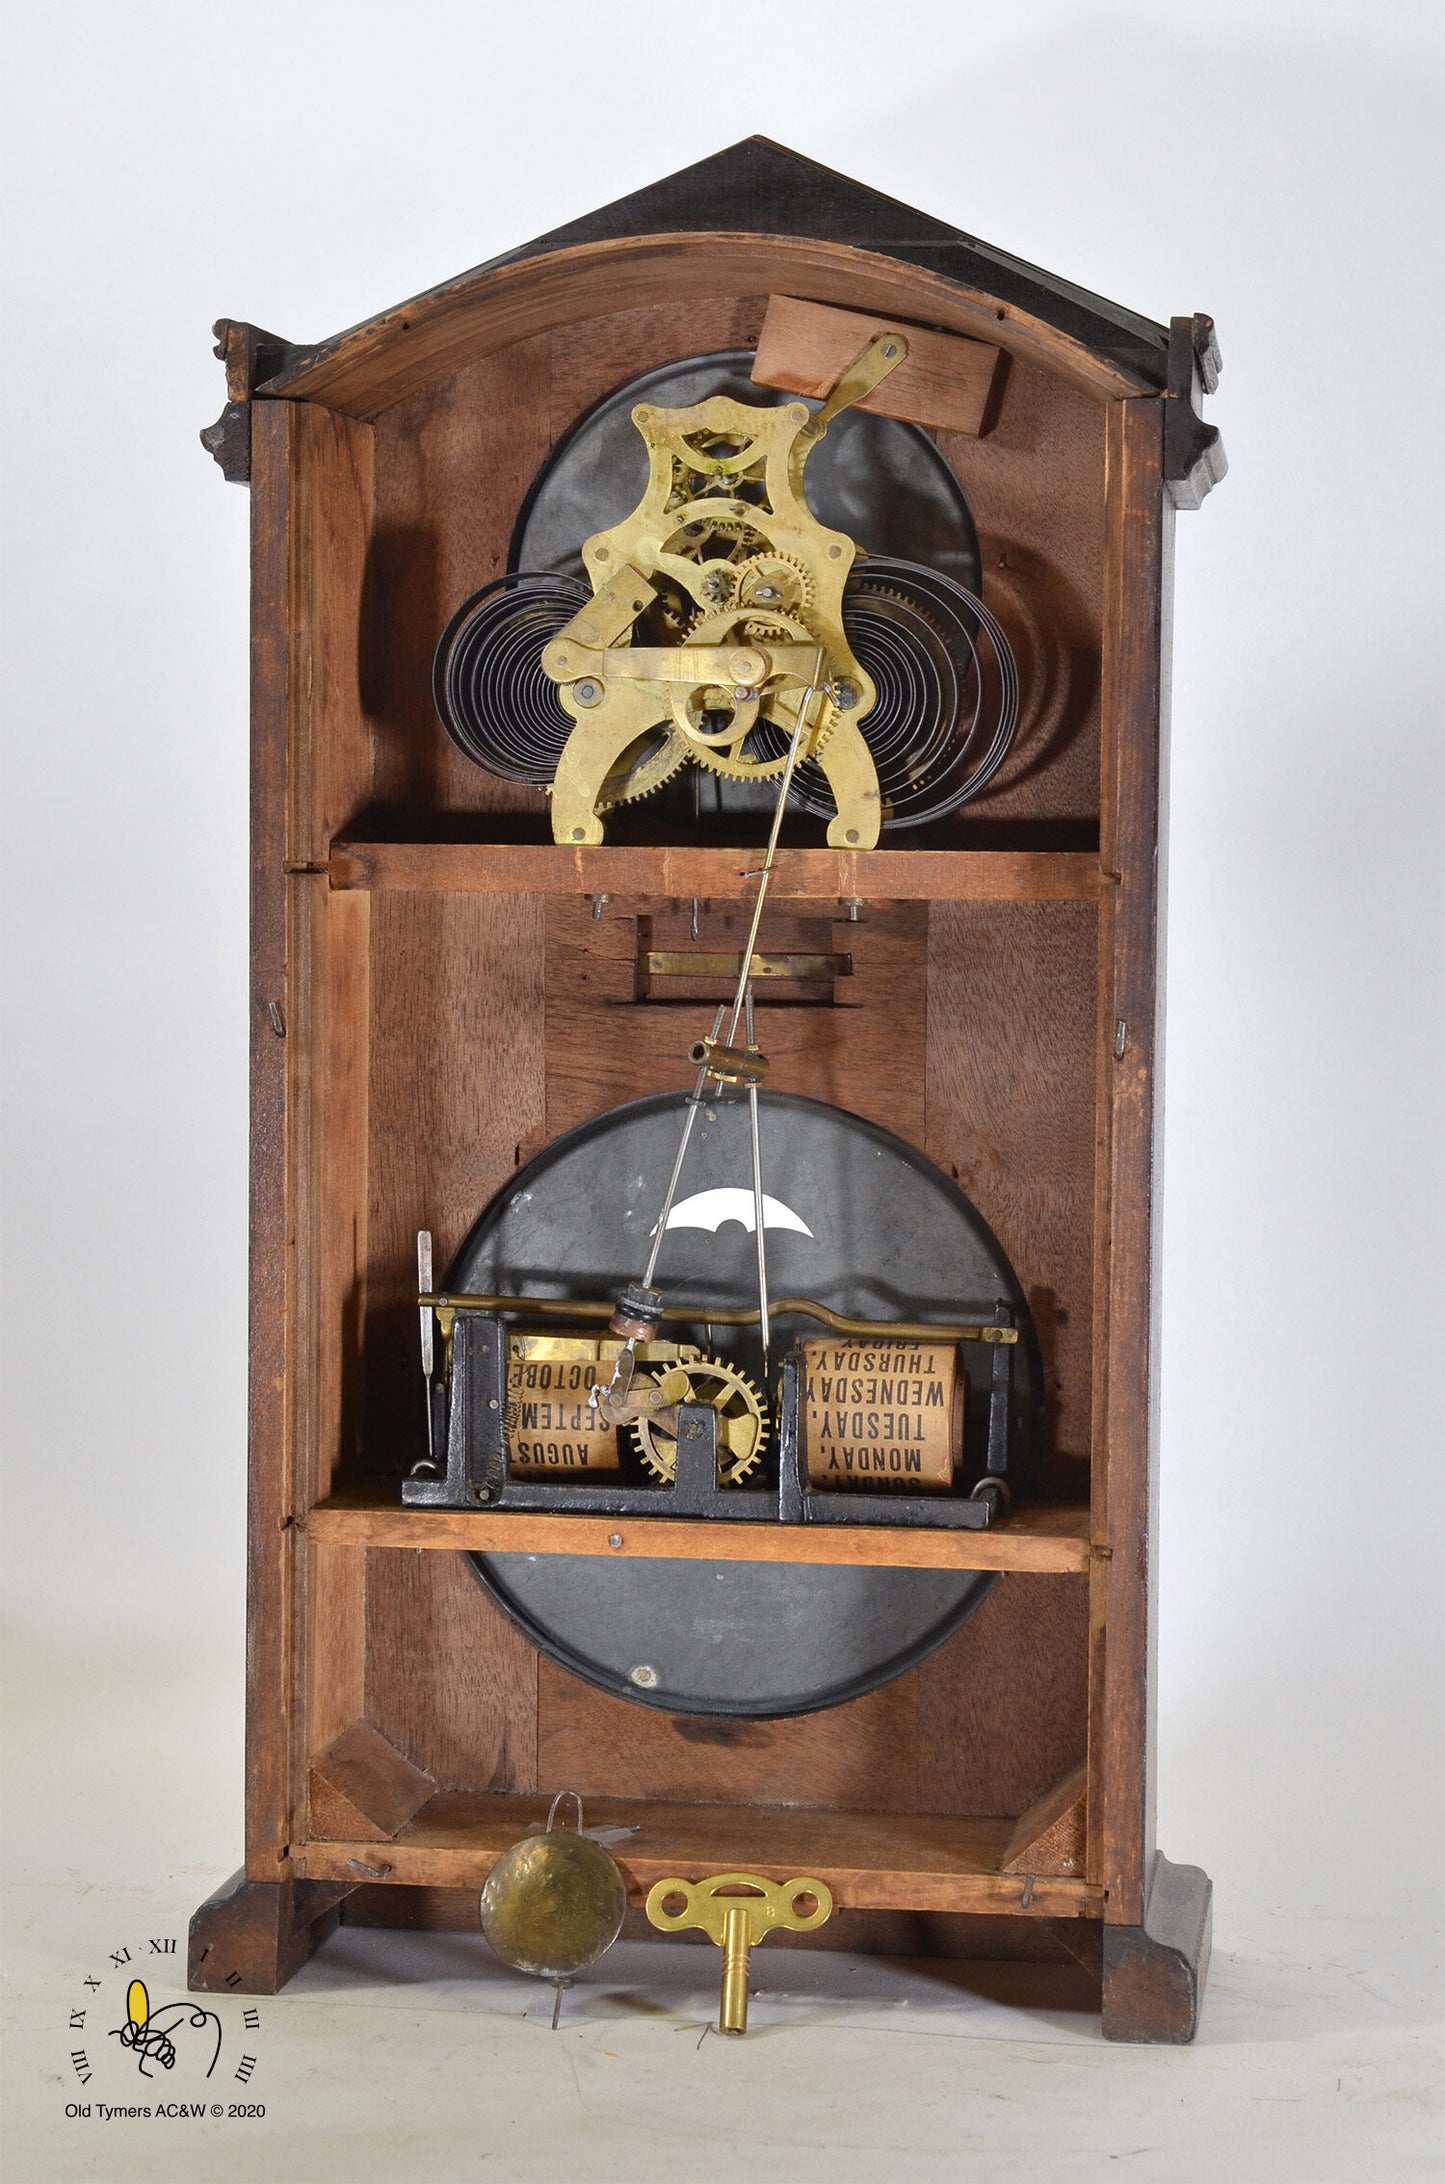 Ithaca Calendar Mantel Clock